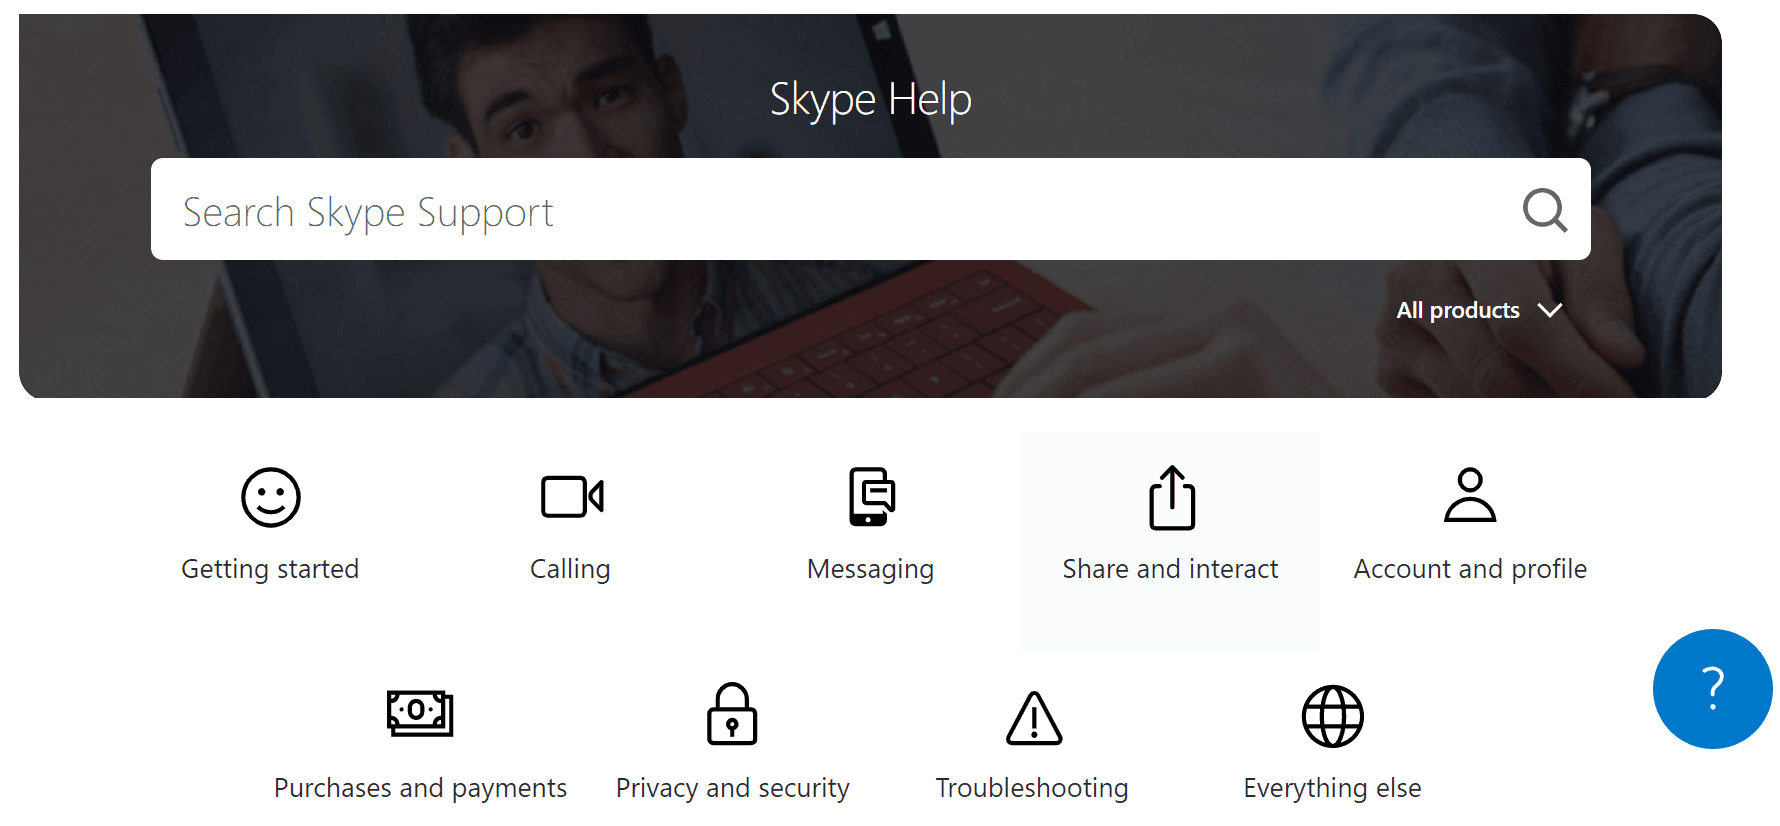 Skype Help documentation examples